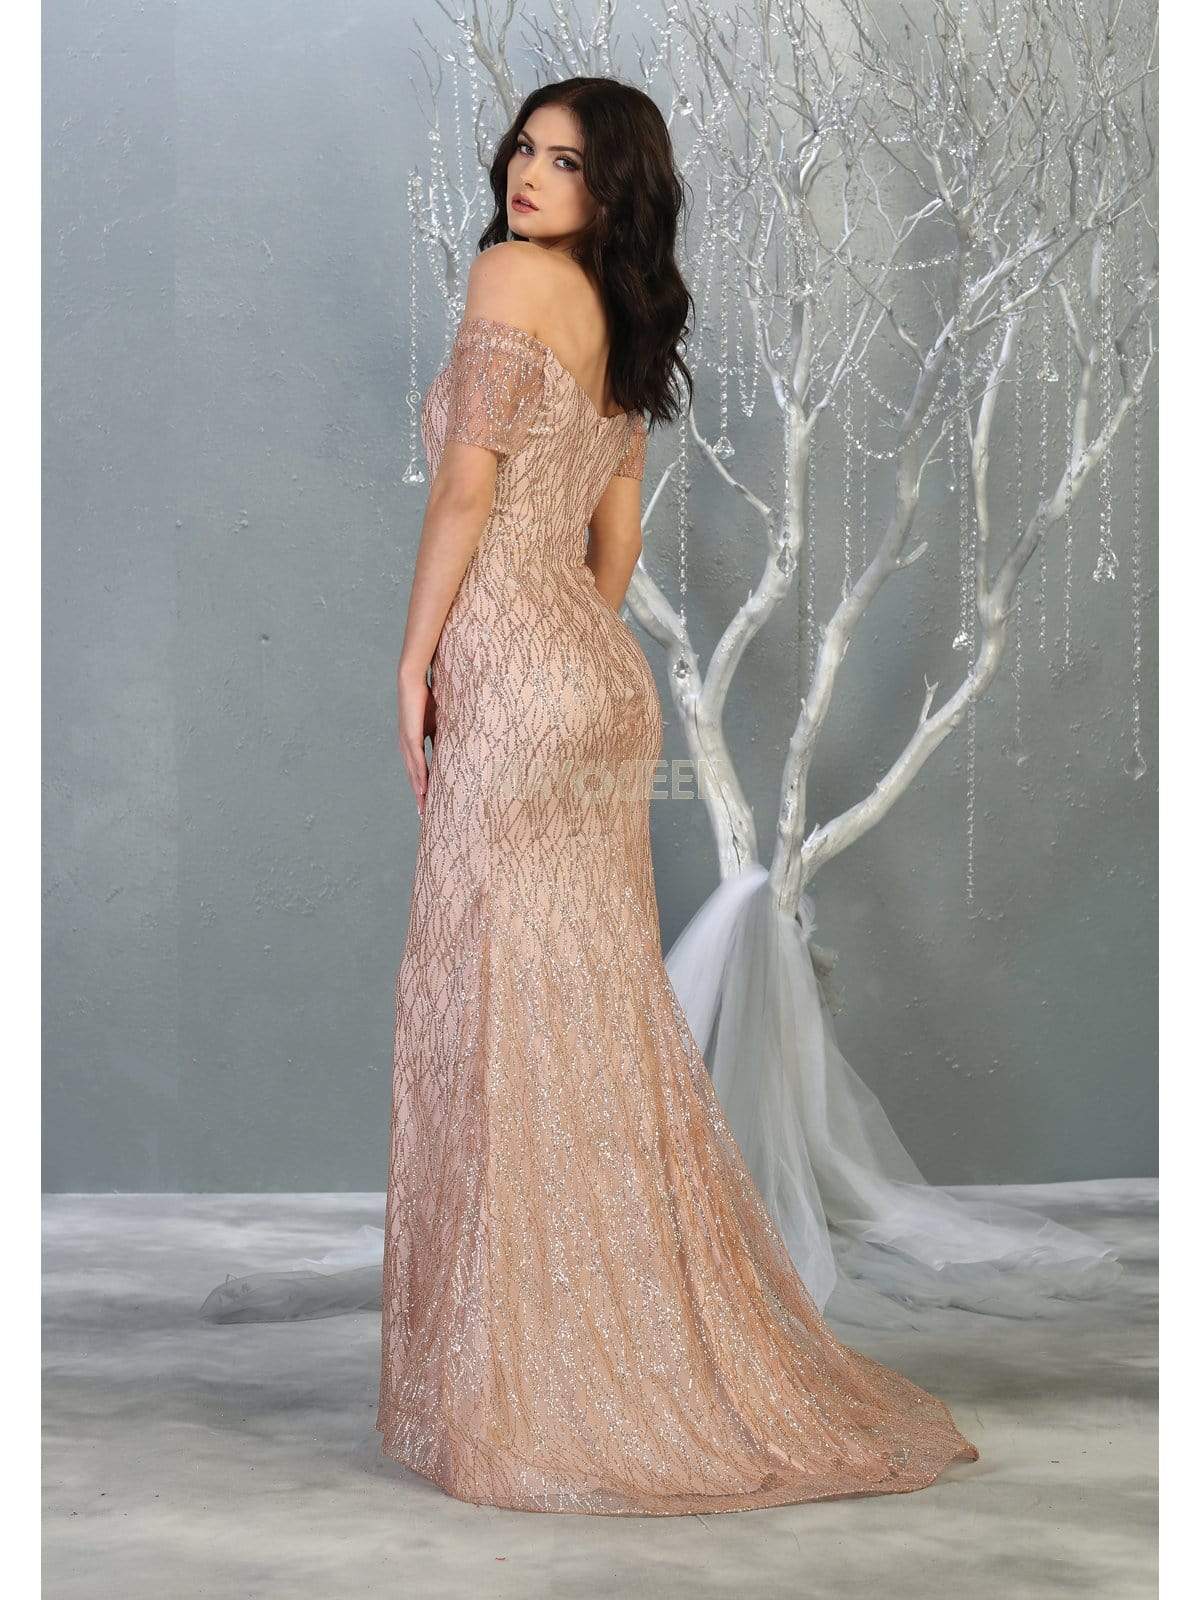 May Queen - MQ1824 Glitter Embellished Off-Shoulder Sheath Dress Evening Dresses